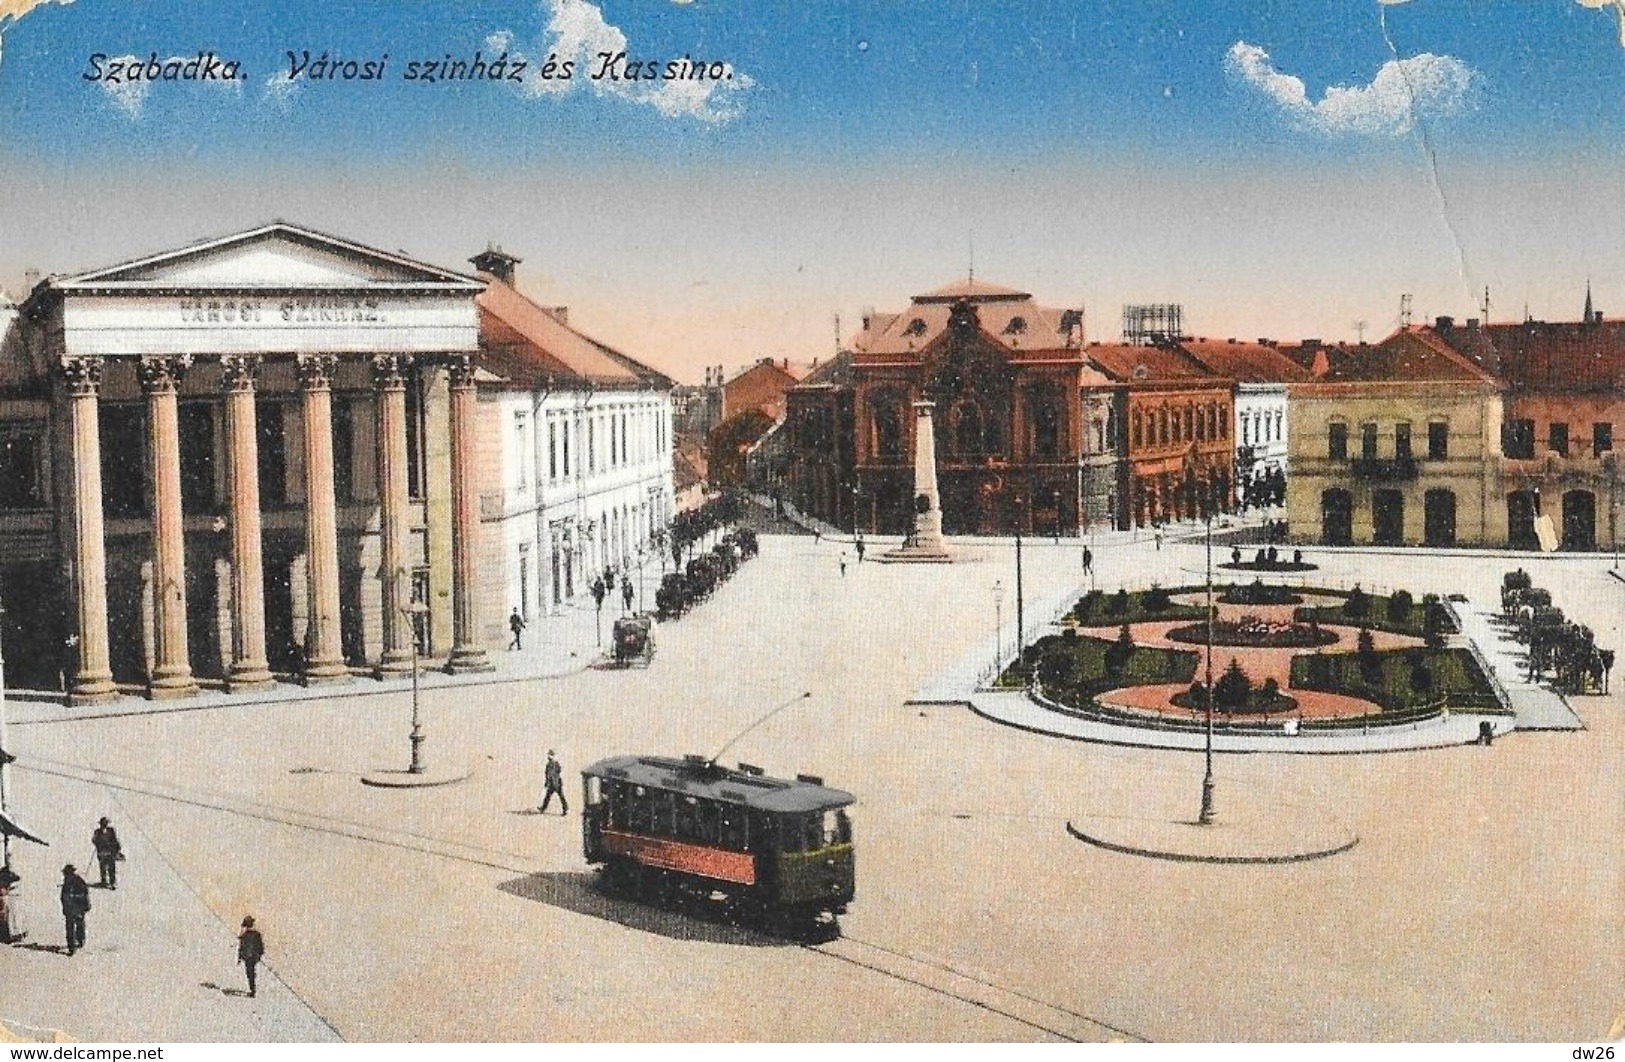 Subotica (Serbie) - Szabadka - Varosi Szinhaz és Kassino, Tramway - Edition L. és L. - Carte Colorisée - Serbie